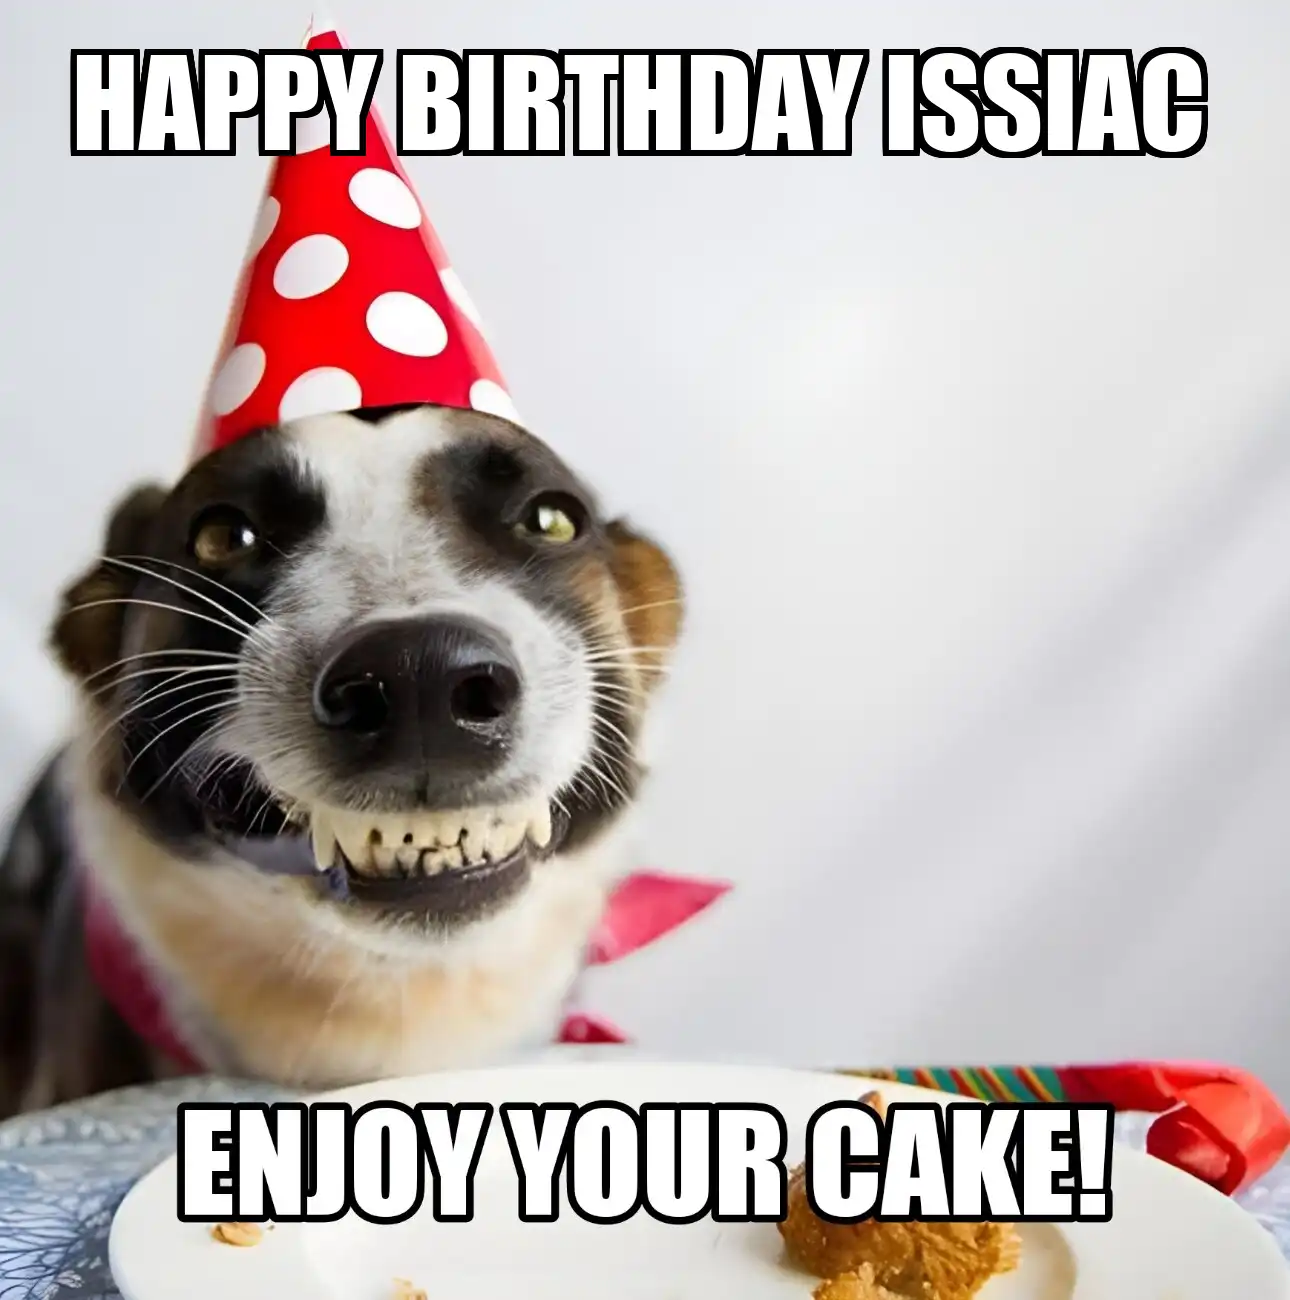 Happy Birthday Issiac Enjoy Your Cake Dog Meme